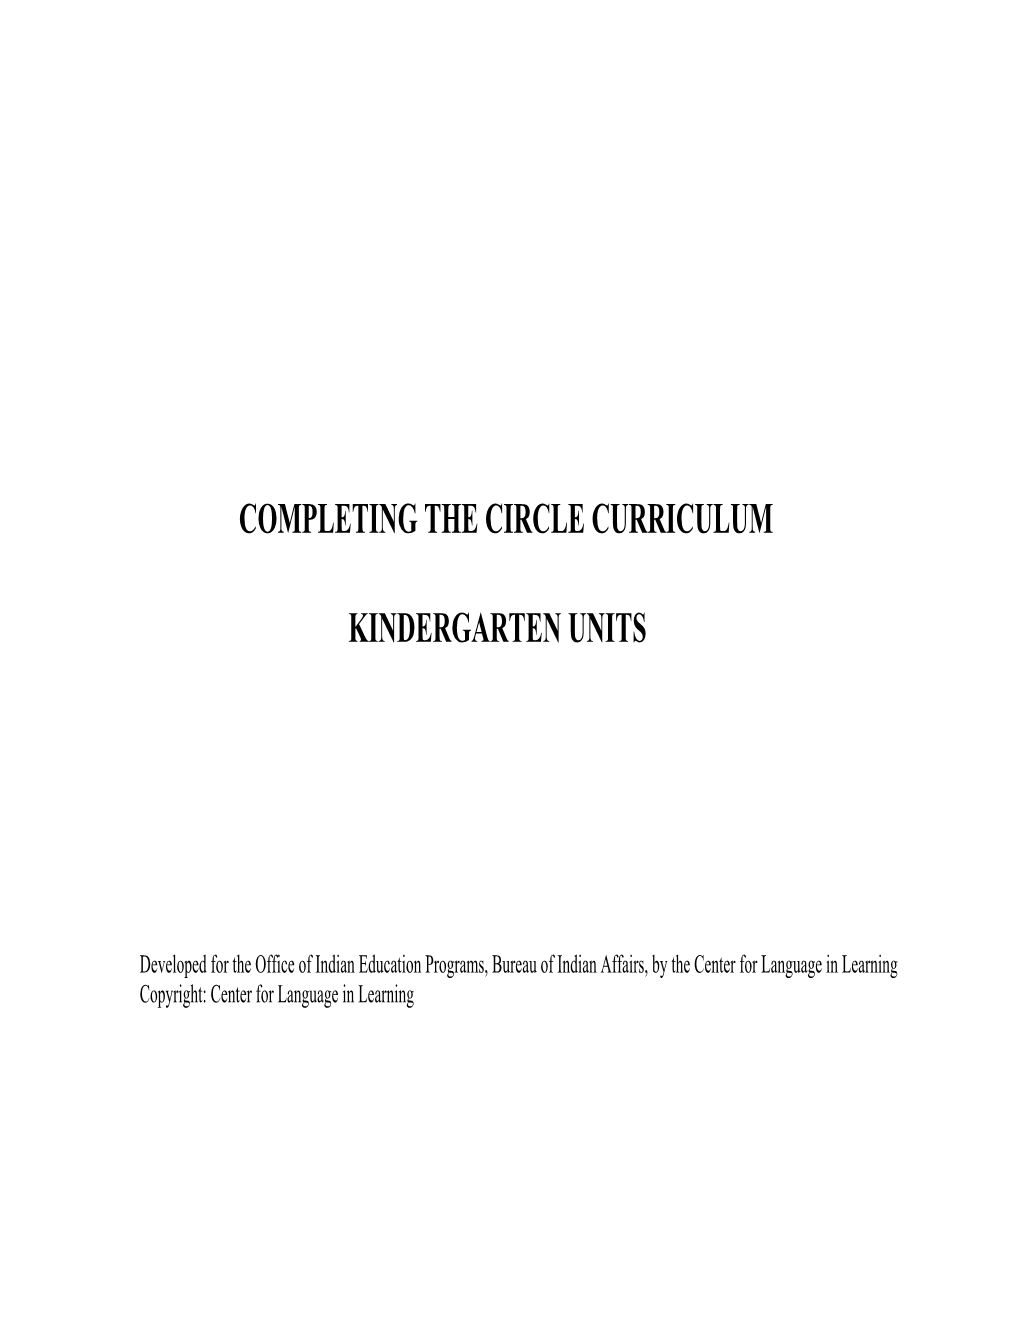 Completing the Circle Curriculum Kindergarten